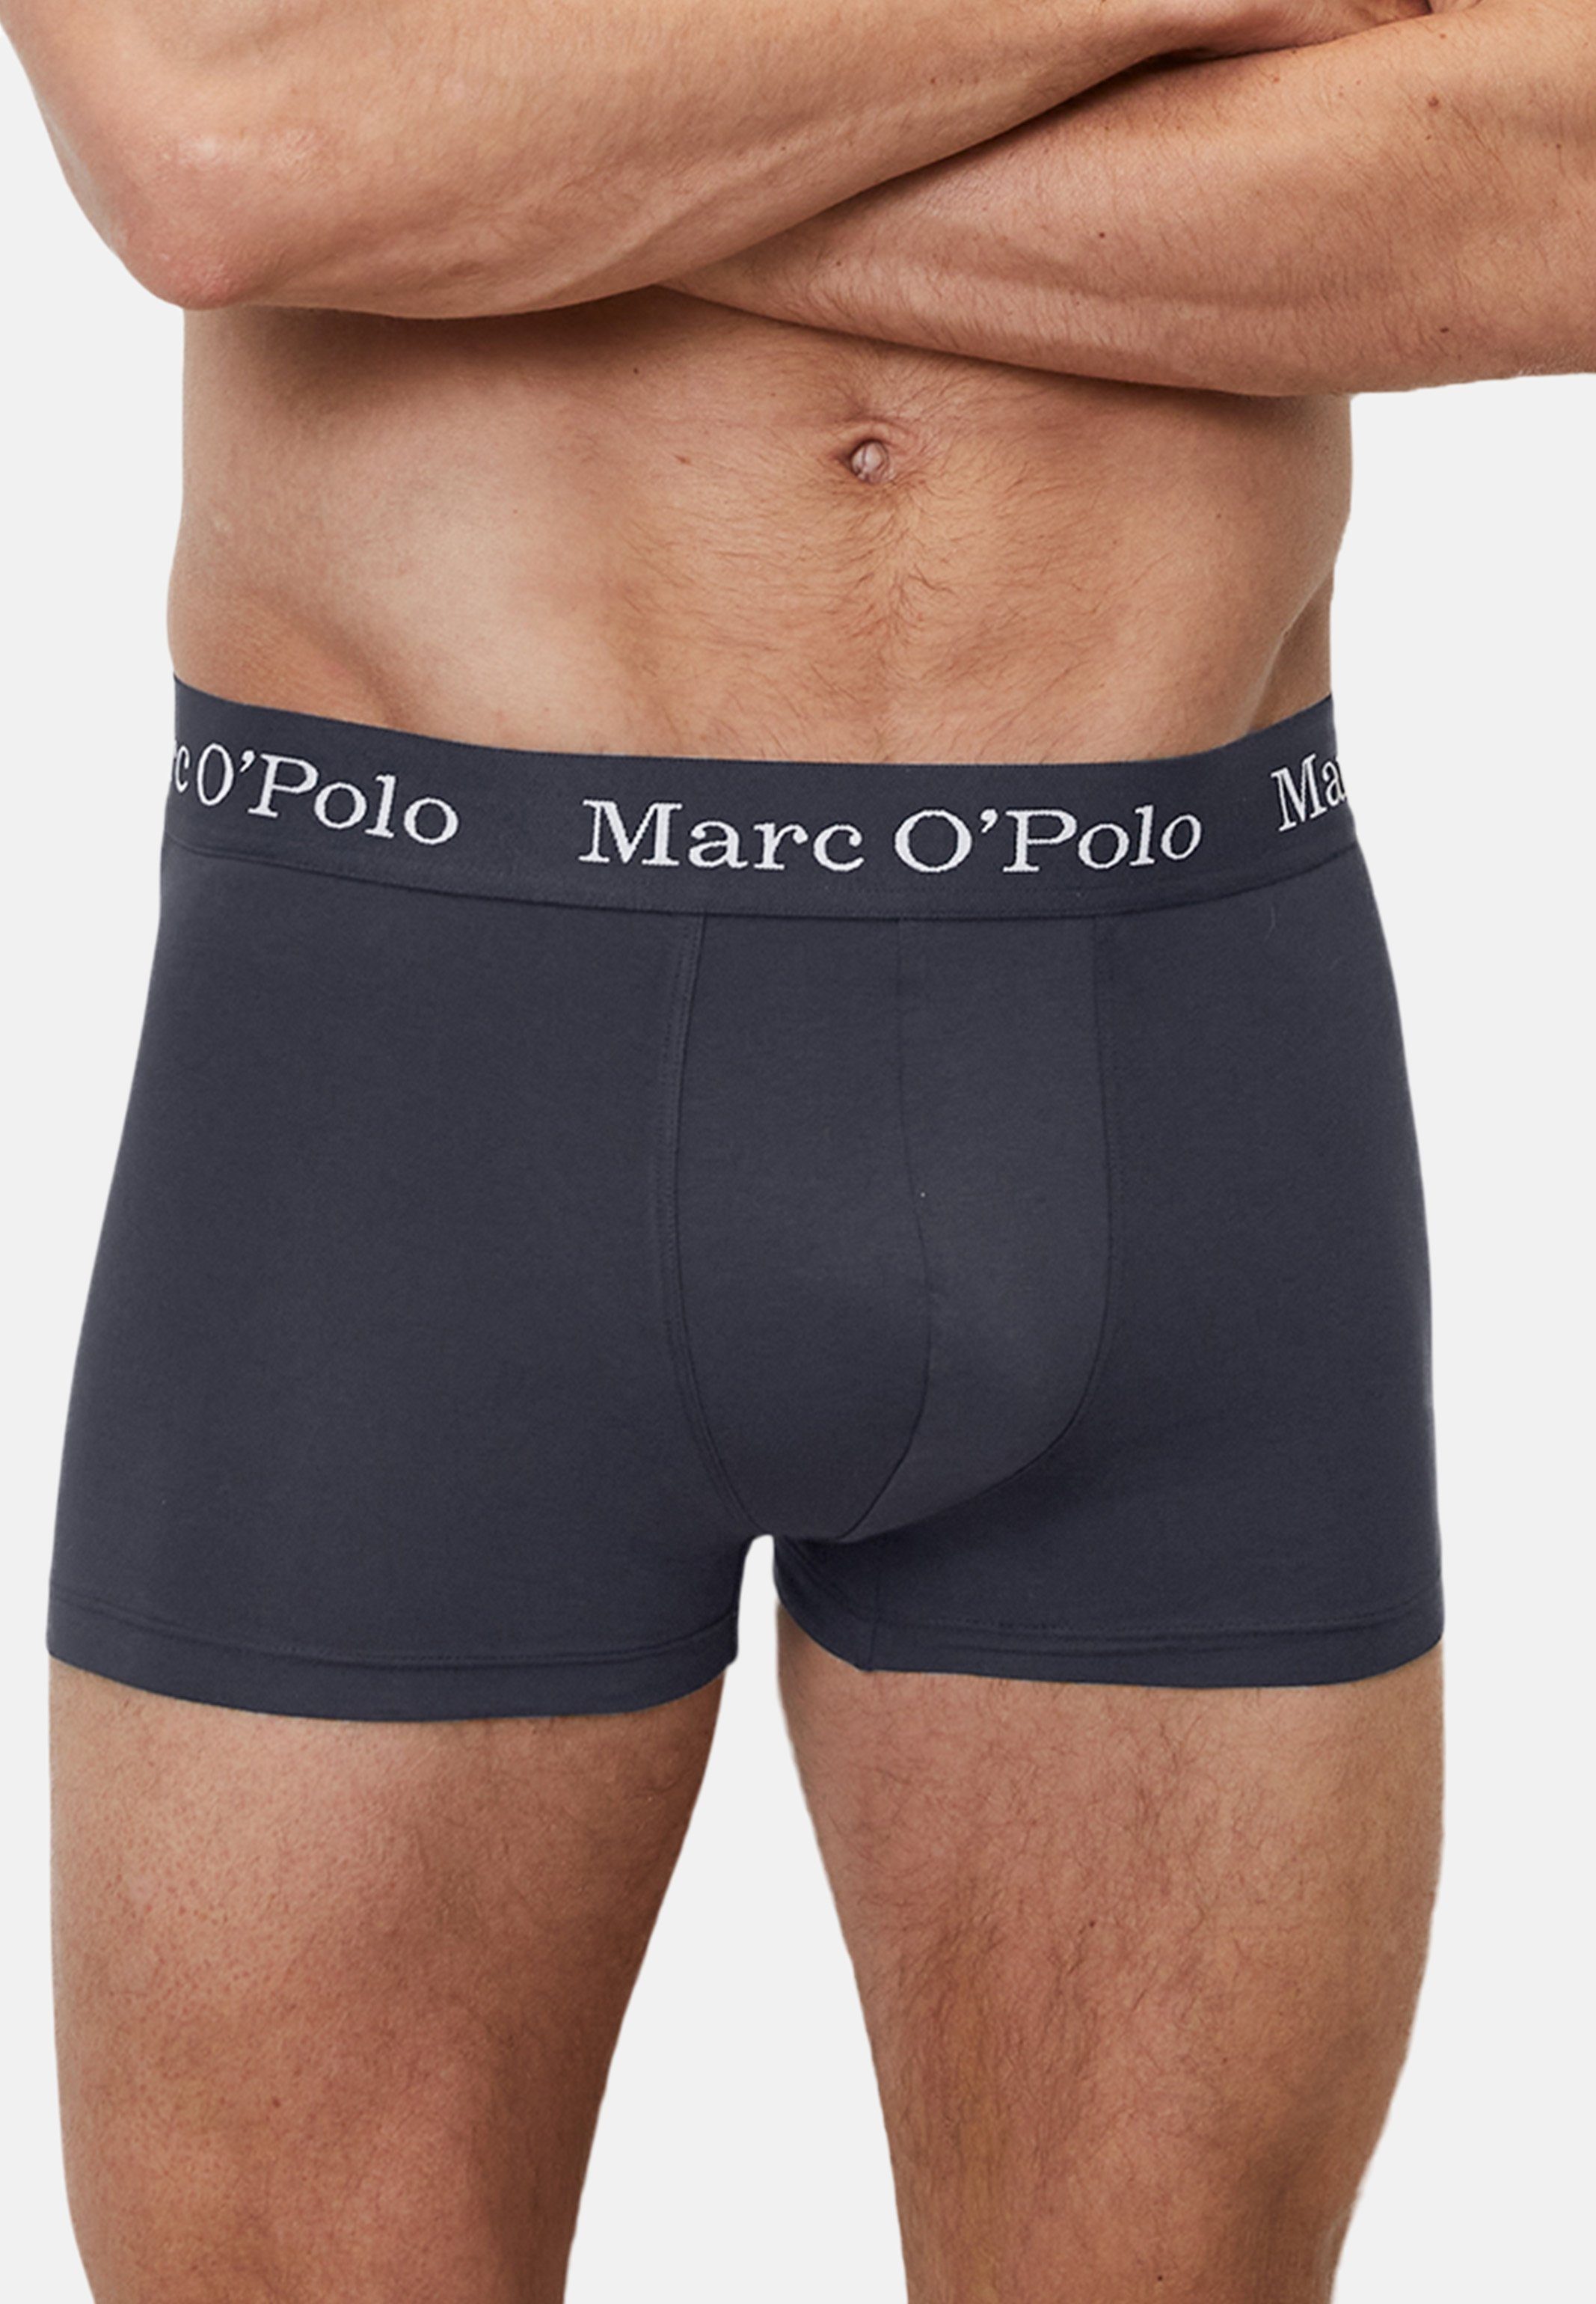 10er (Spar-Set, 10-St) Short Baumwolle / Retro - - O'Polo Navy/Grey Retro Marc Elements Melange Boxer Eingriff Ohne Cotton Pack Organic - Pant